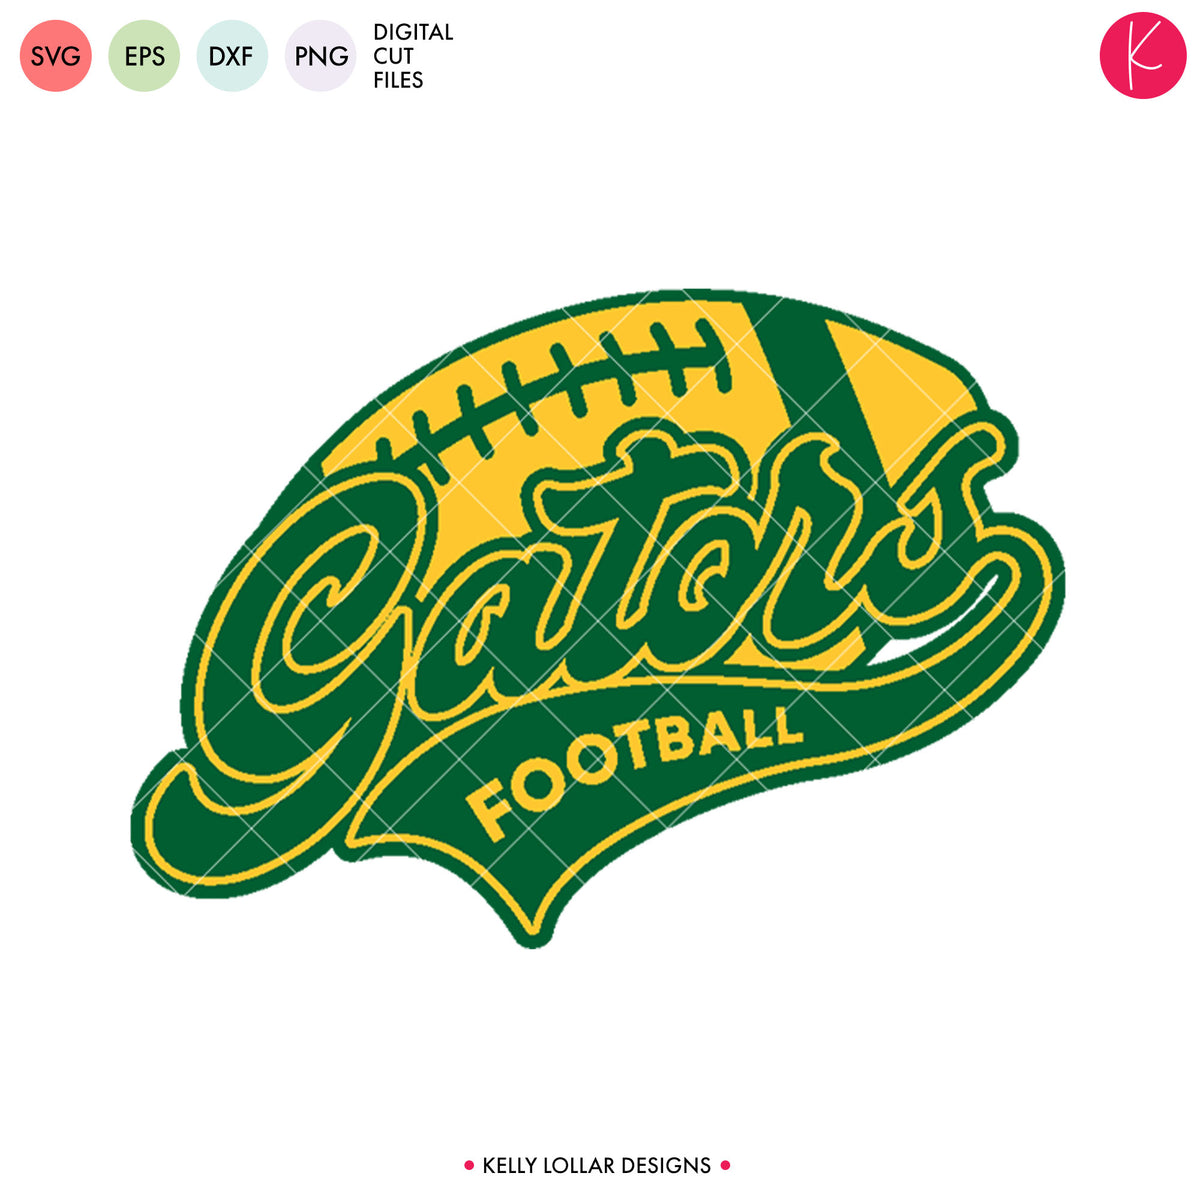 Gators Football Bundle | SVG DXF EPS PNG Cut Files